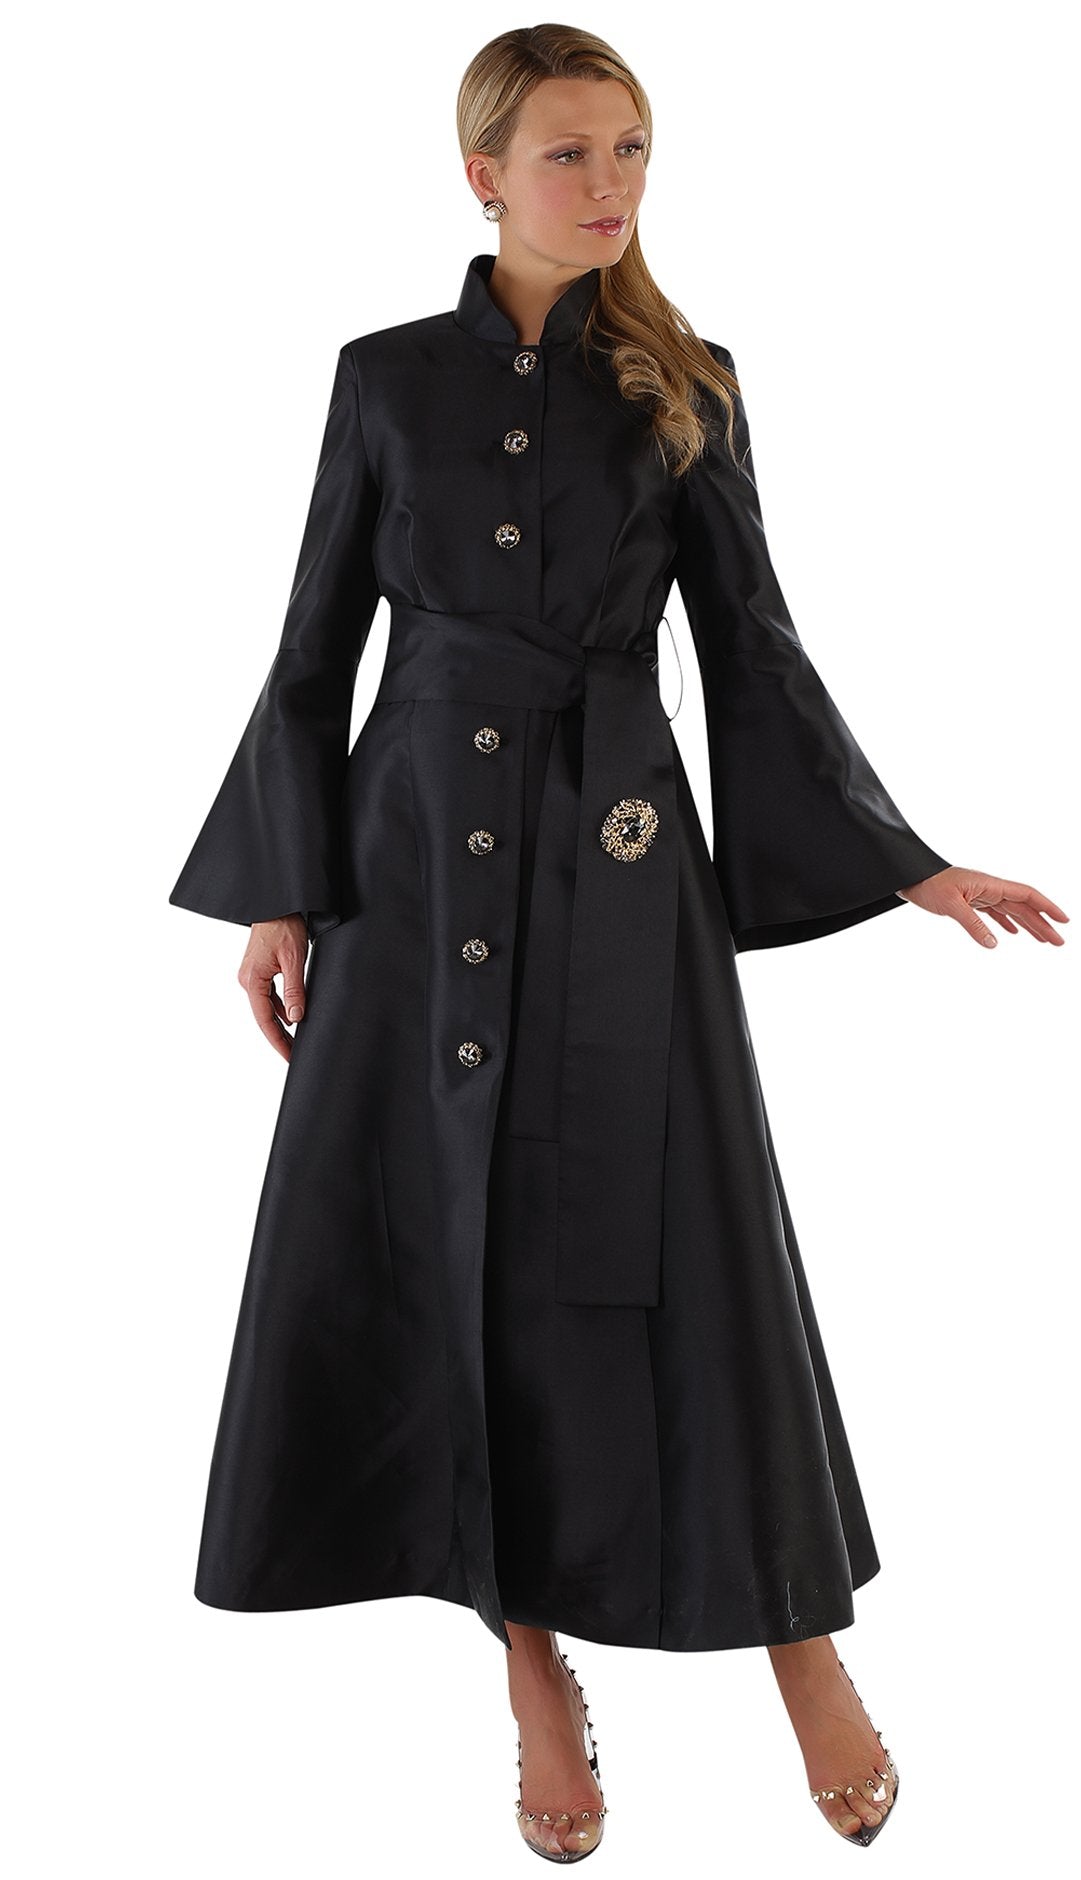 Tally Taylor Church Robe 4732C-Black - Church Suits For Less